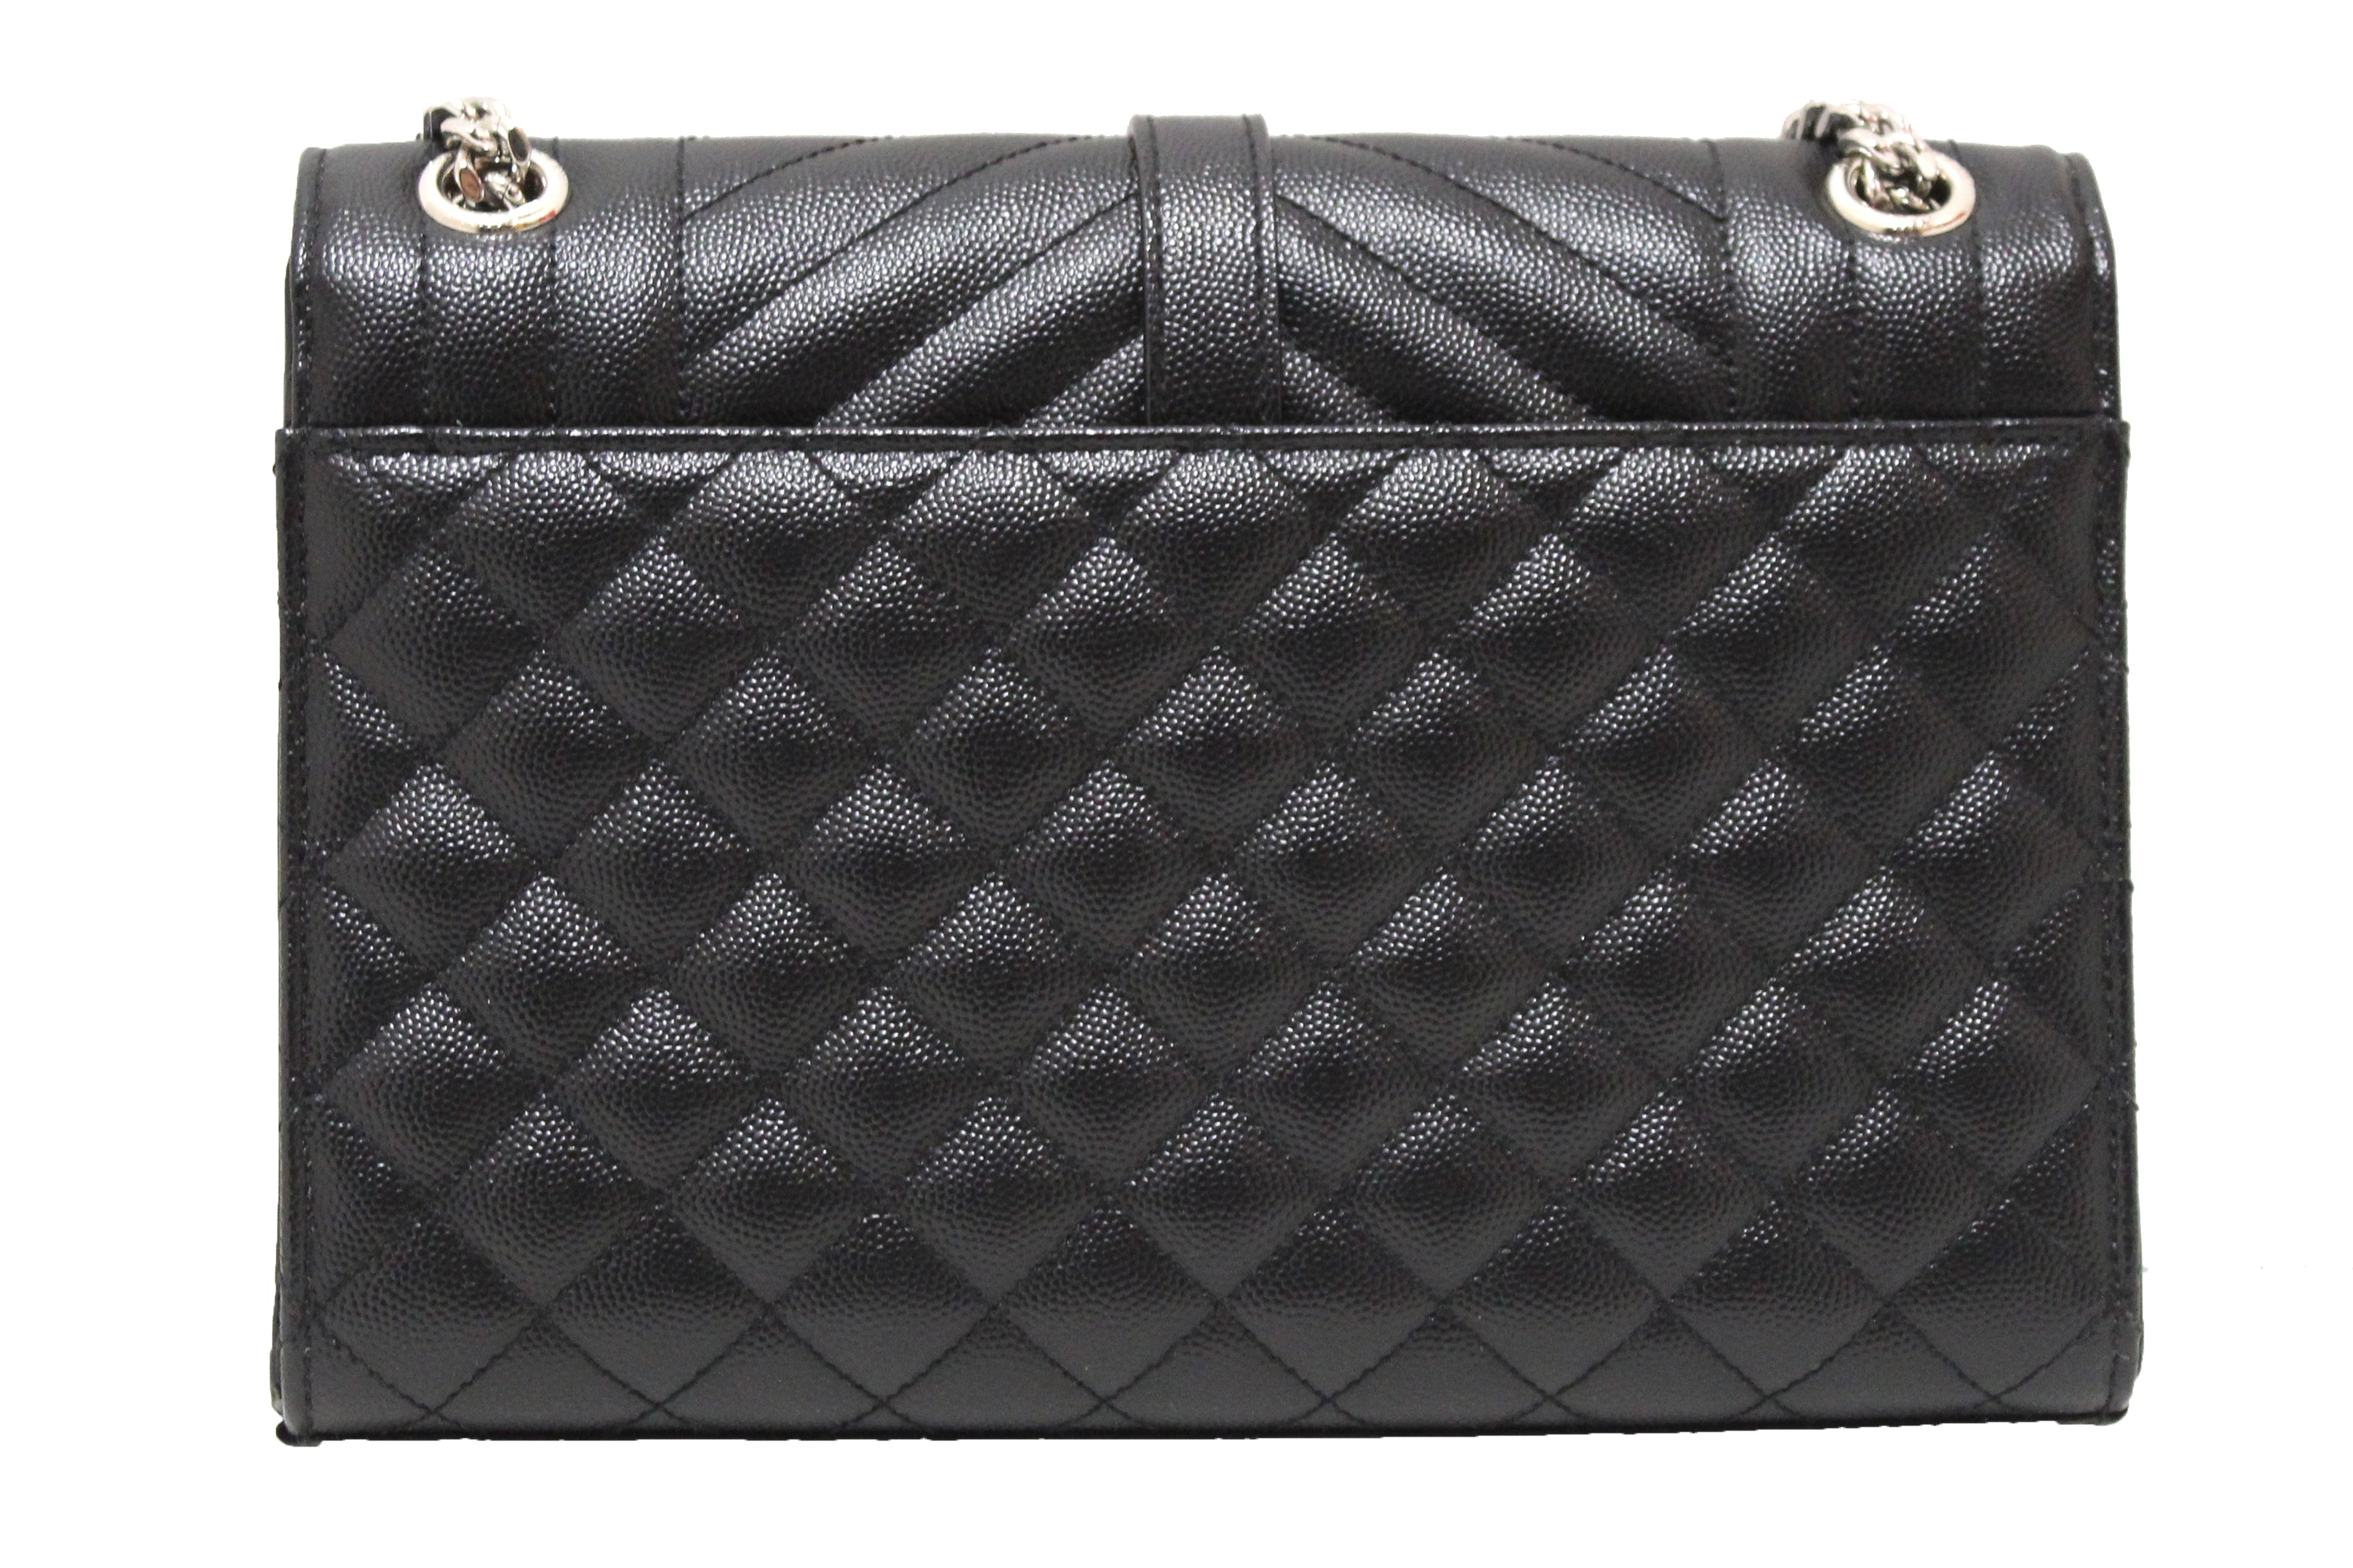 Authentic Saint Laurent Black Matelasse Grain De Poudre Embossed Leather Medium Envelope Bag